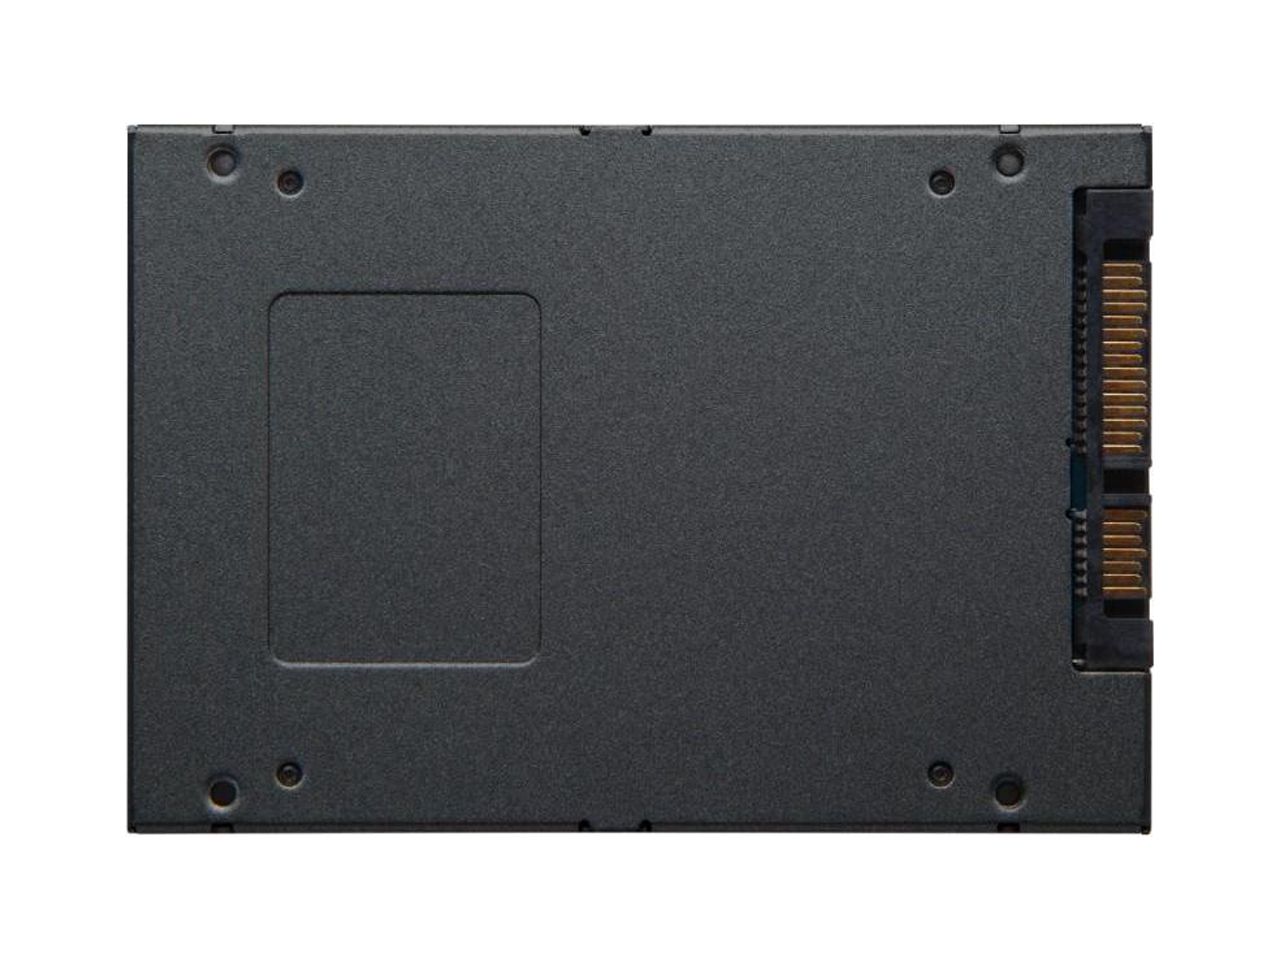 Kingston A400 960GB SATA 3 2.5" Internal SSD - HDD Replacement SA400S37/960G - image 2 of 20